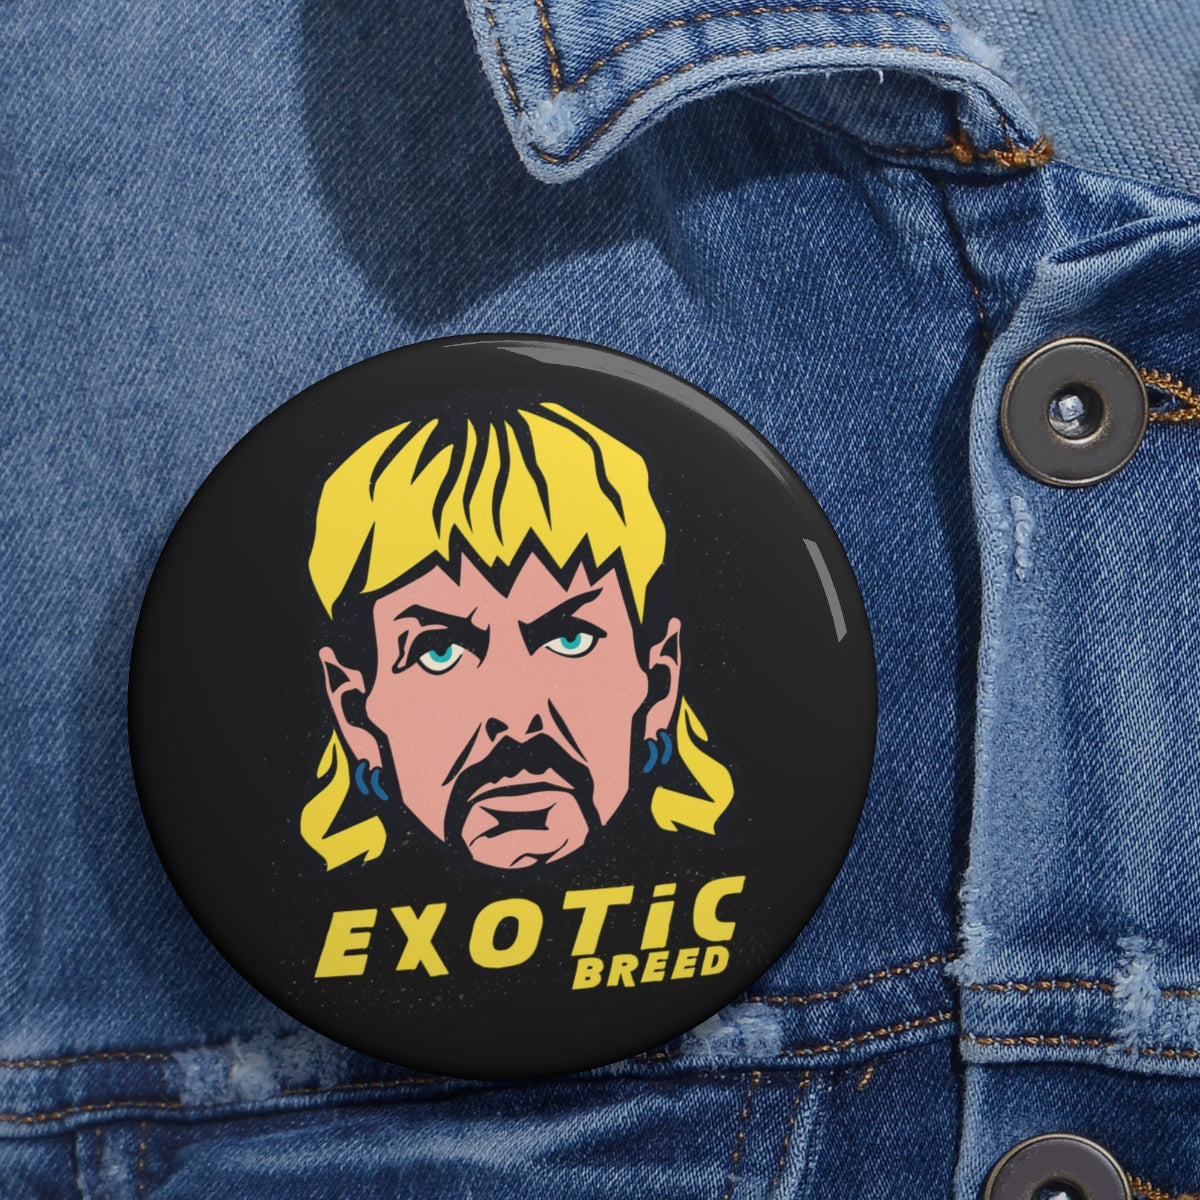 Exotic Breed | Joe Exotic Meme Pin Button